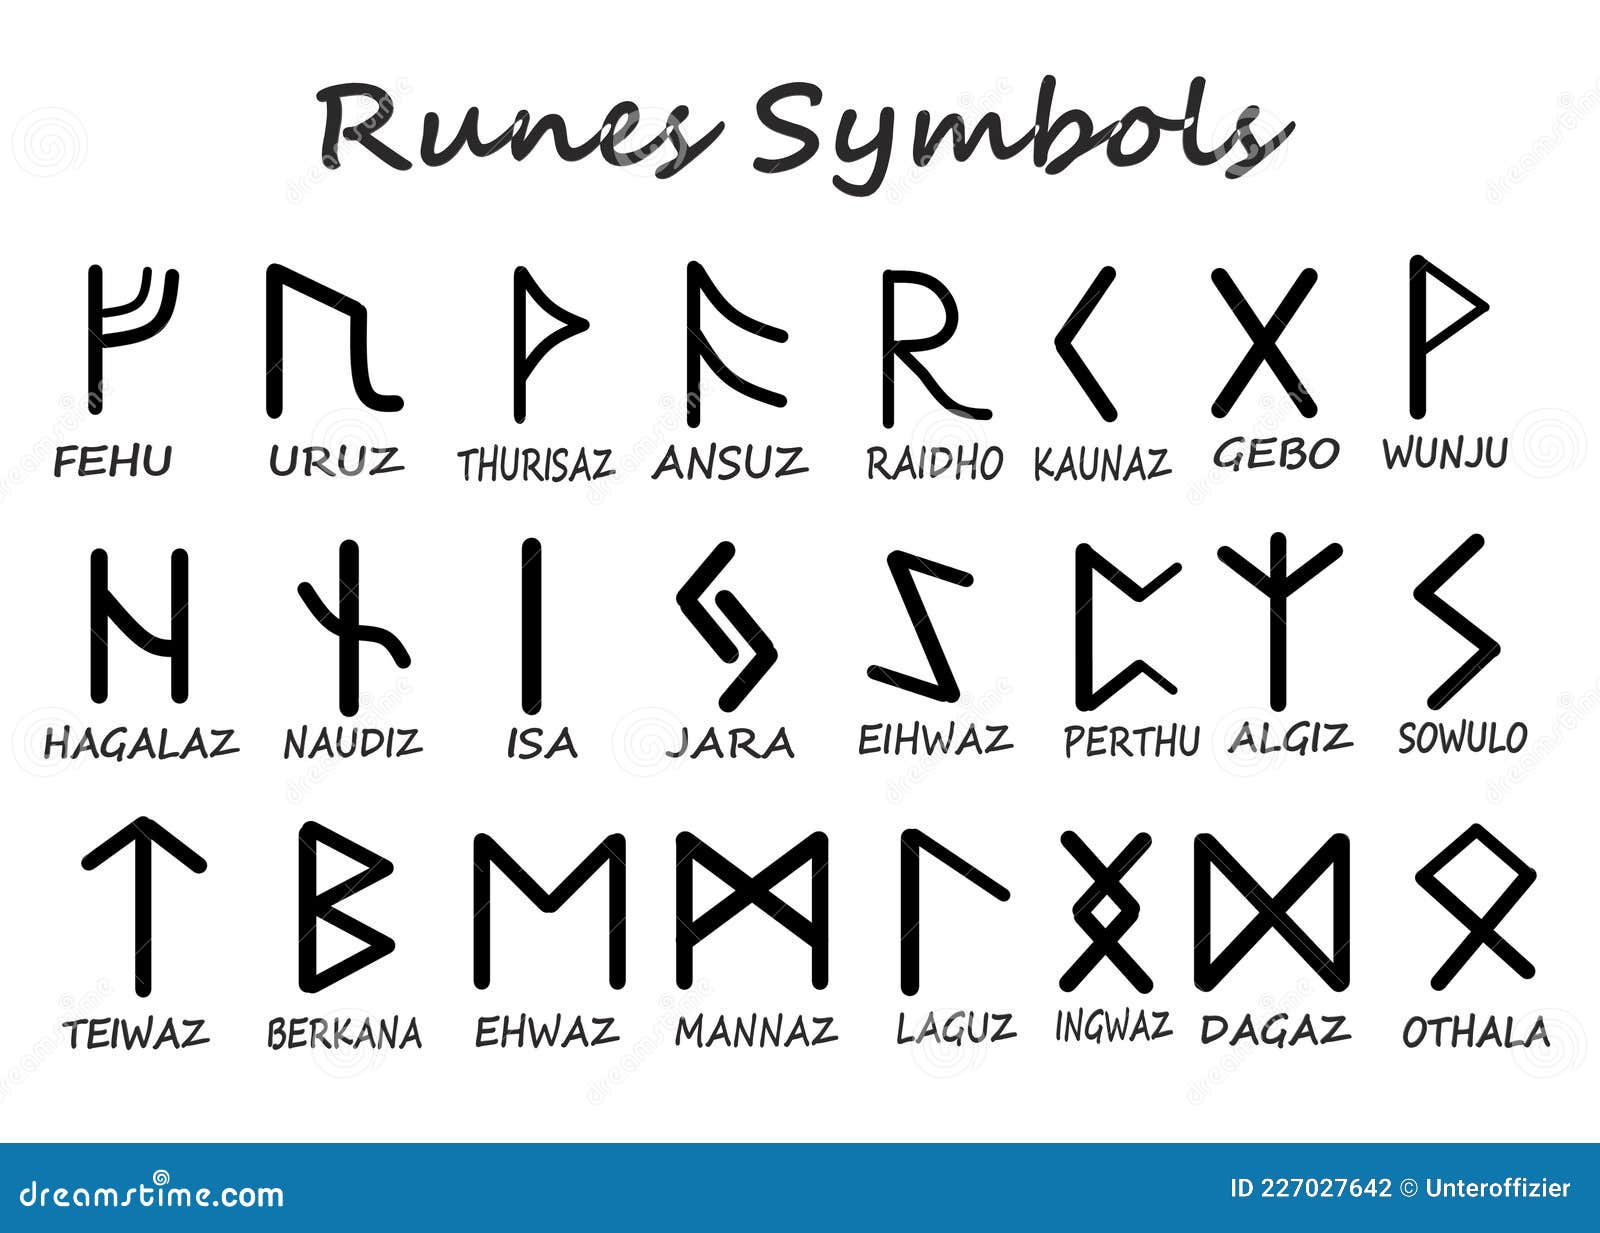 runes-symbols-and-names-set-runic-alphabet-futhark-ancient-germans